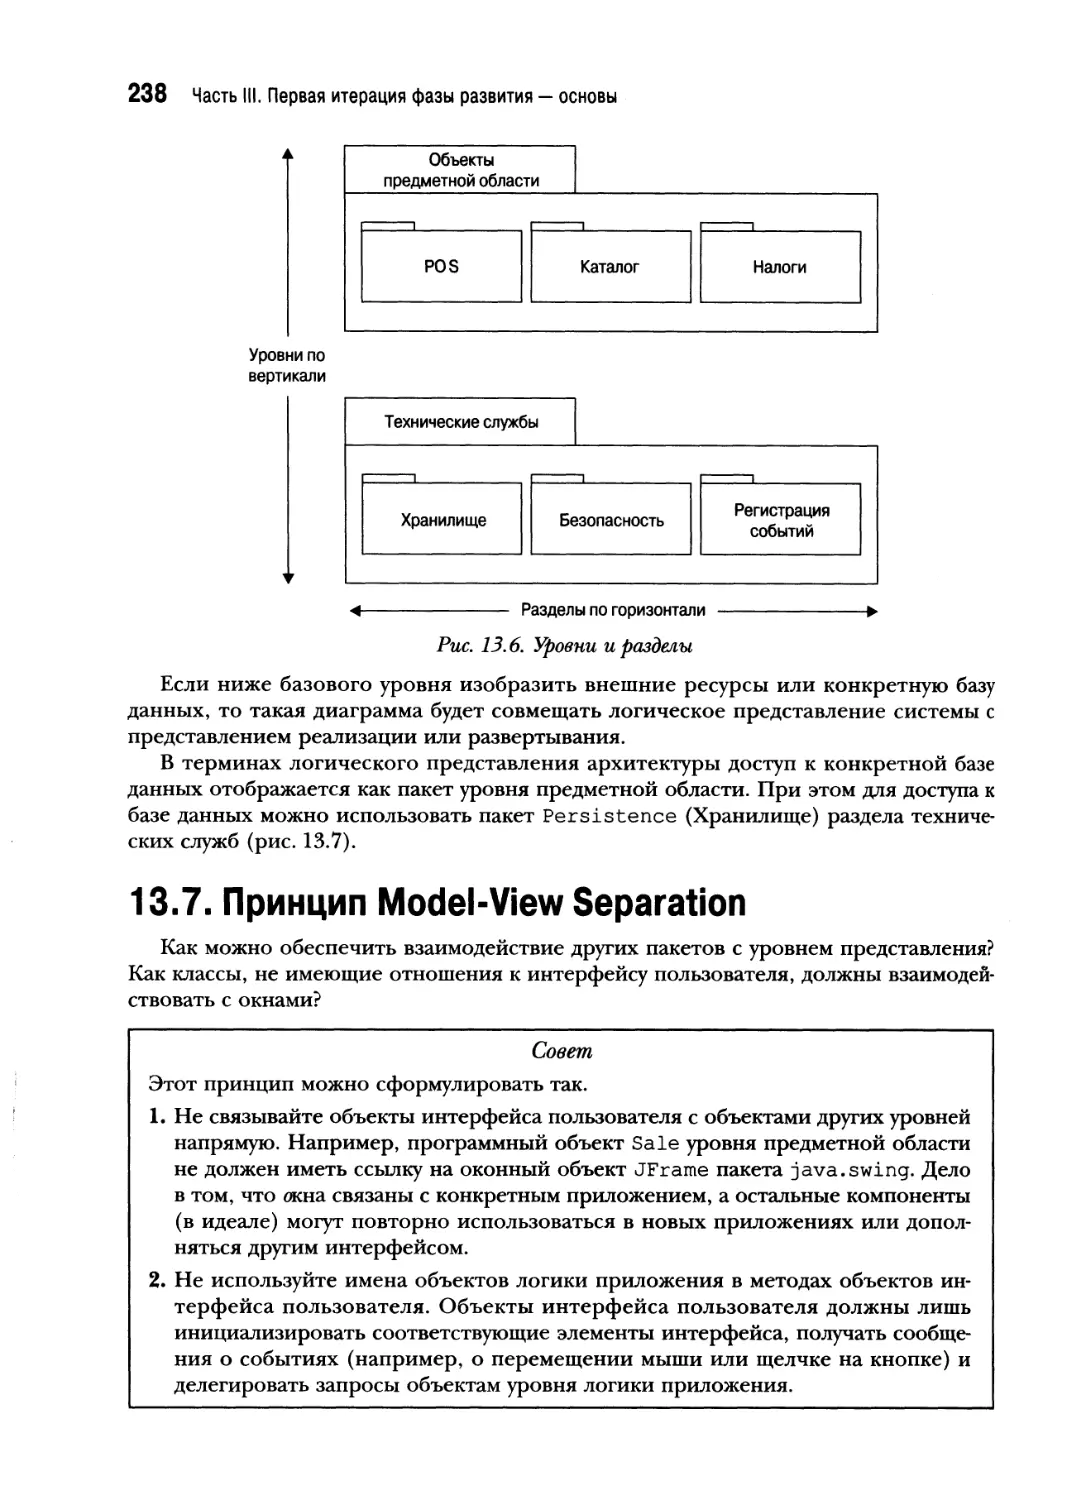 13.7. Принцип Model-View Separation